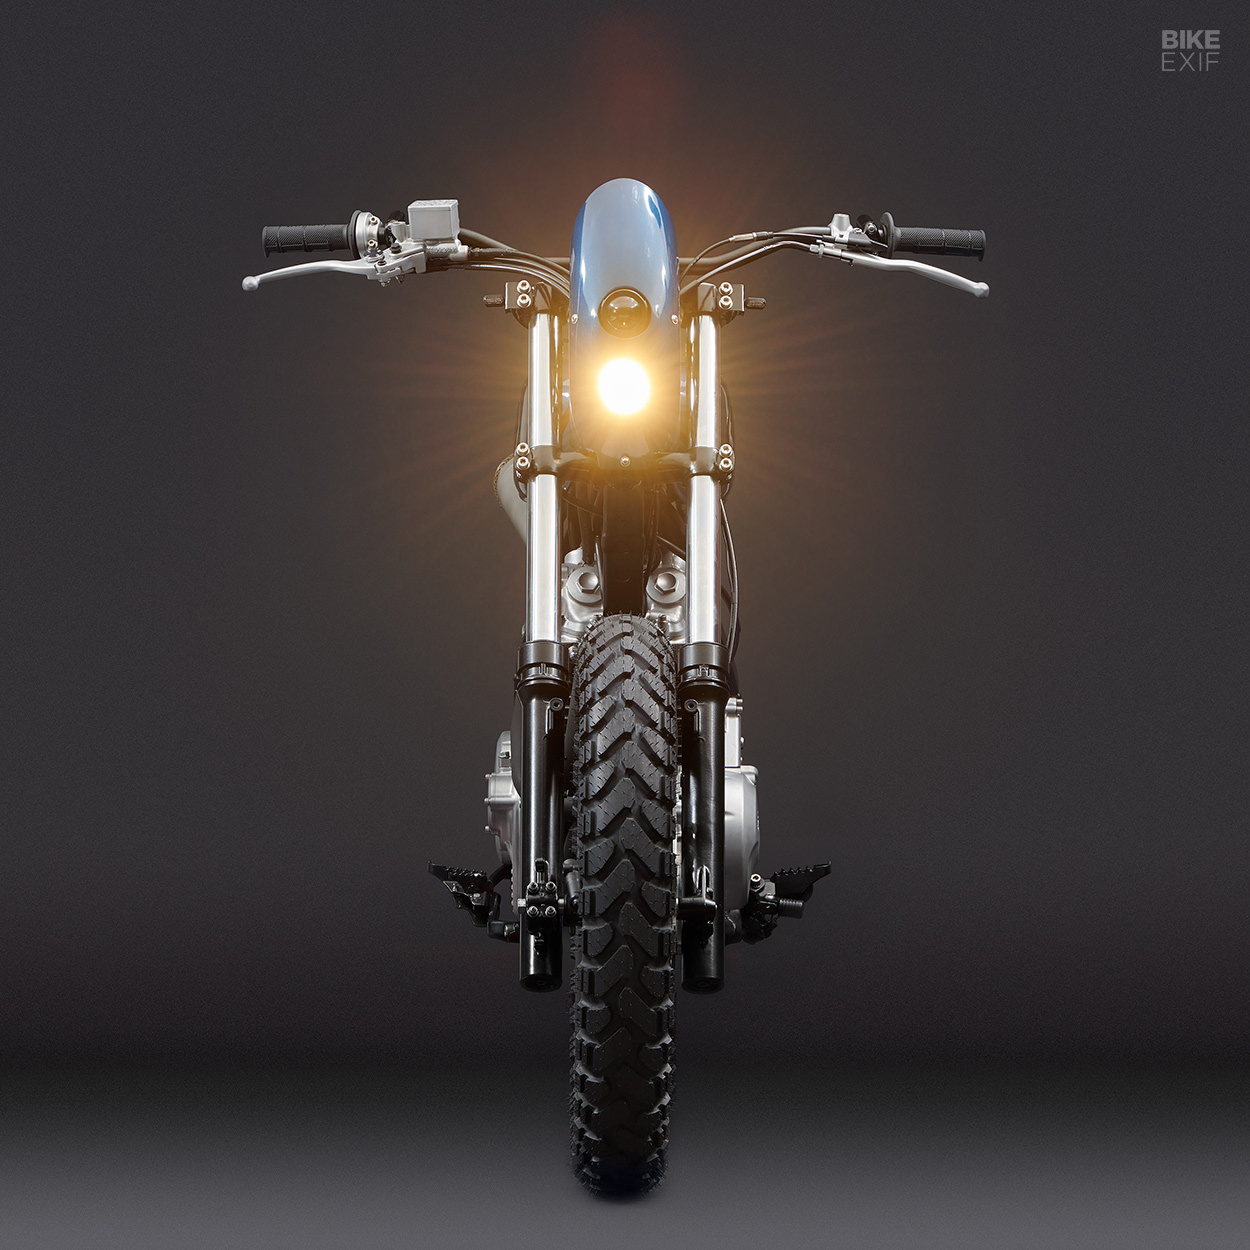 Honda NX650 Dominator scrambler by Earth Motorcycles